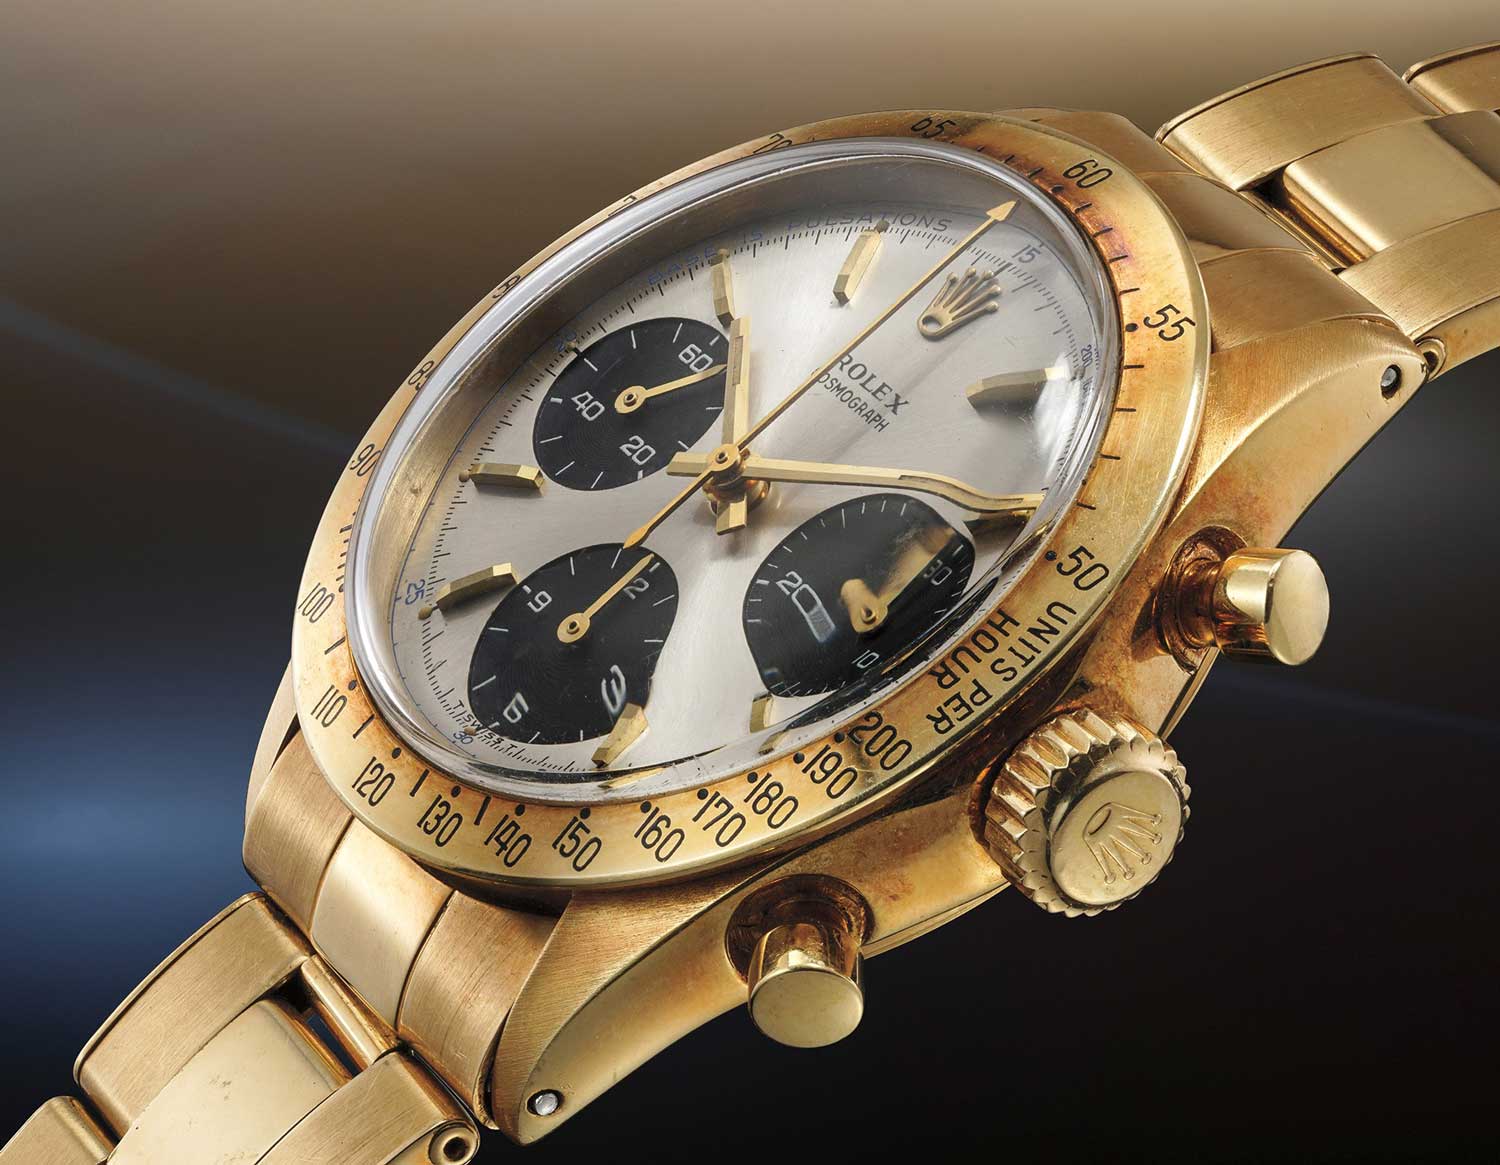 Lot 116: Rolex Ref. 6239 (Image: Phillips Watches)